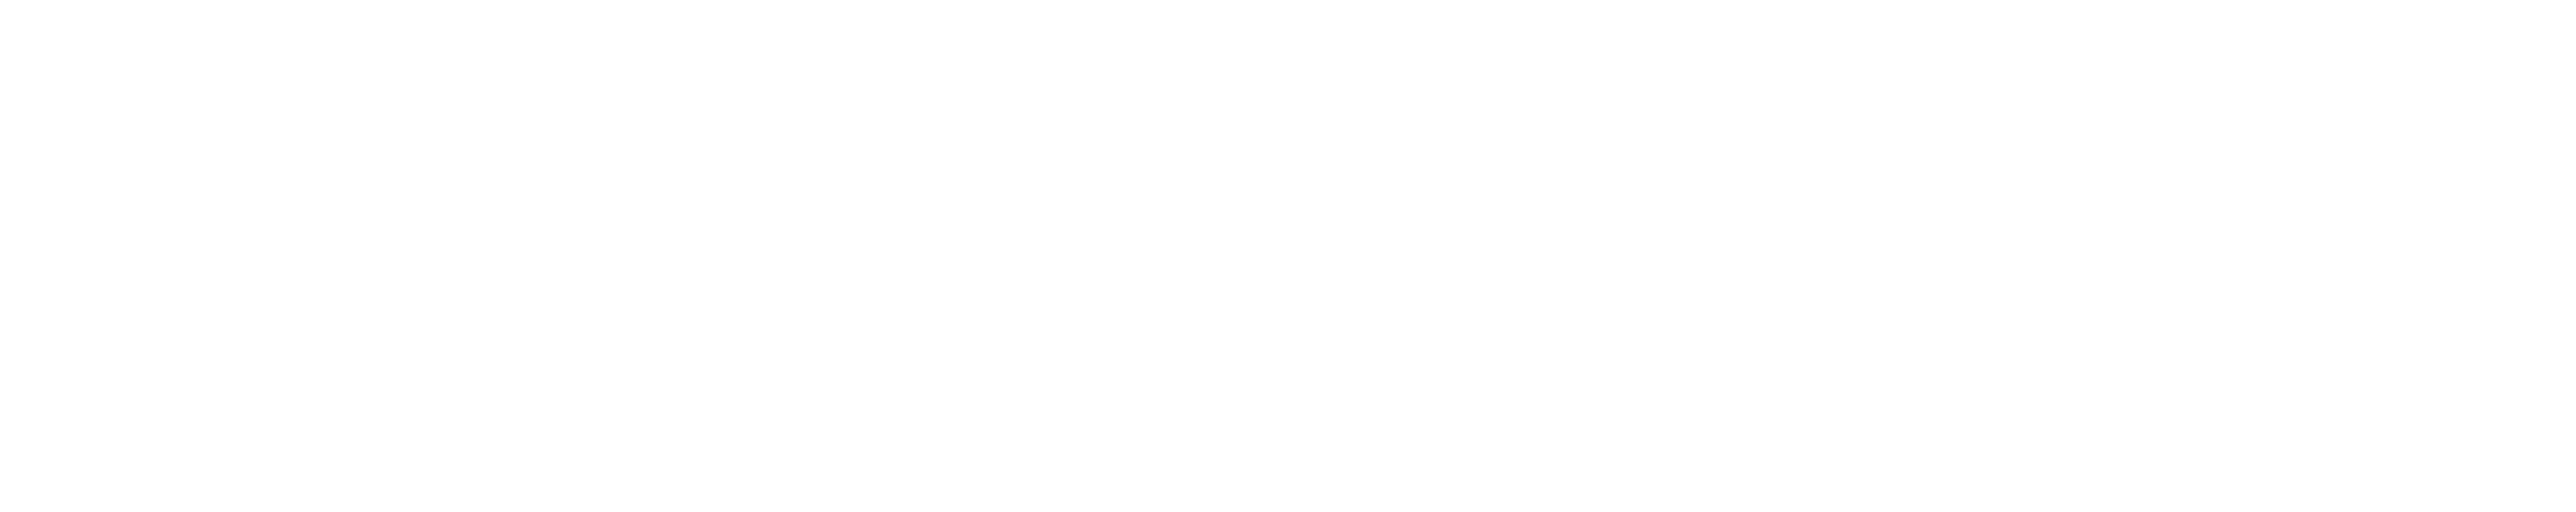 SmarterMail white logo